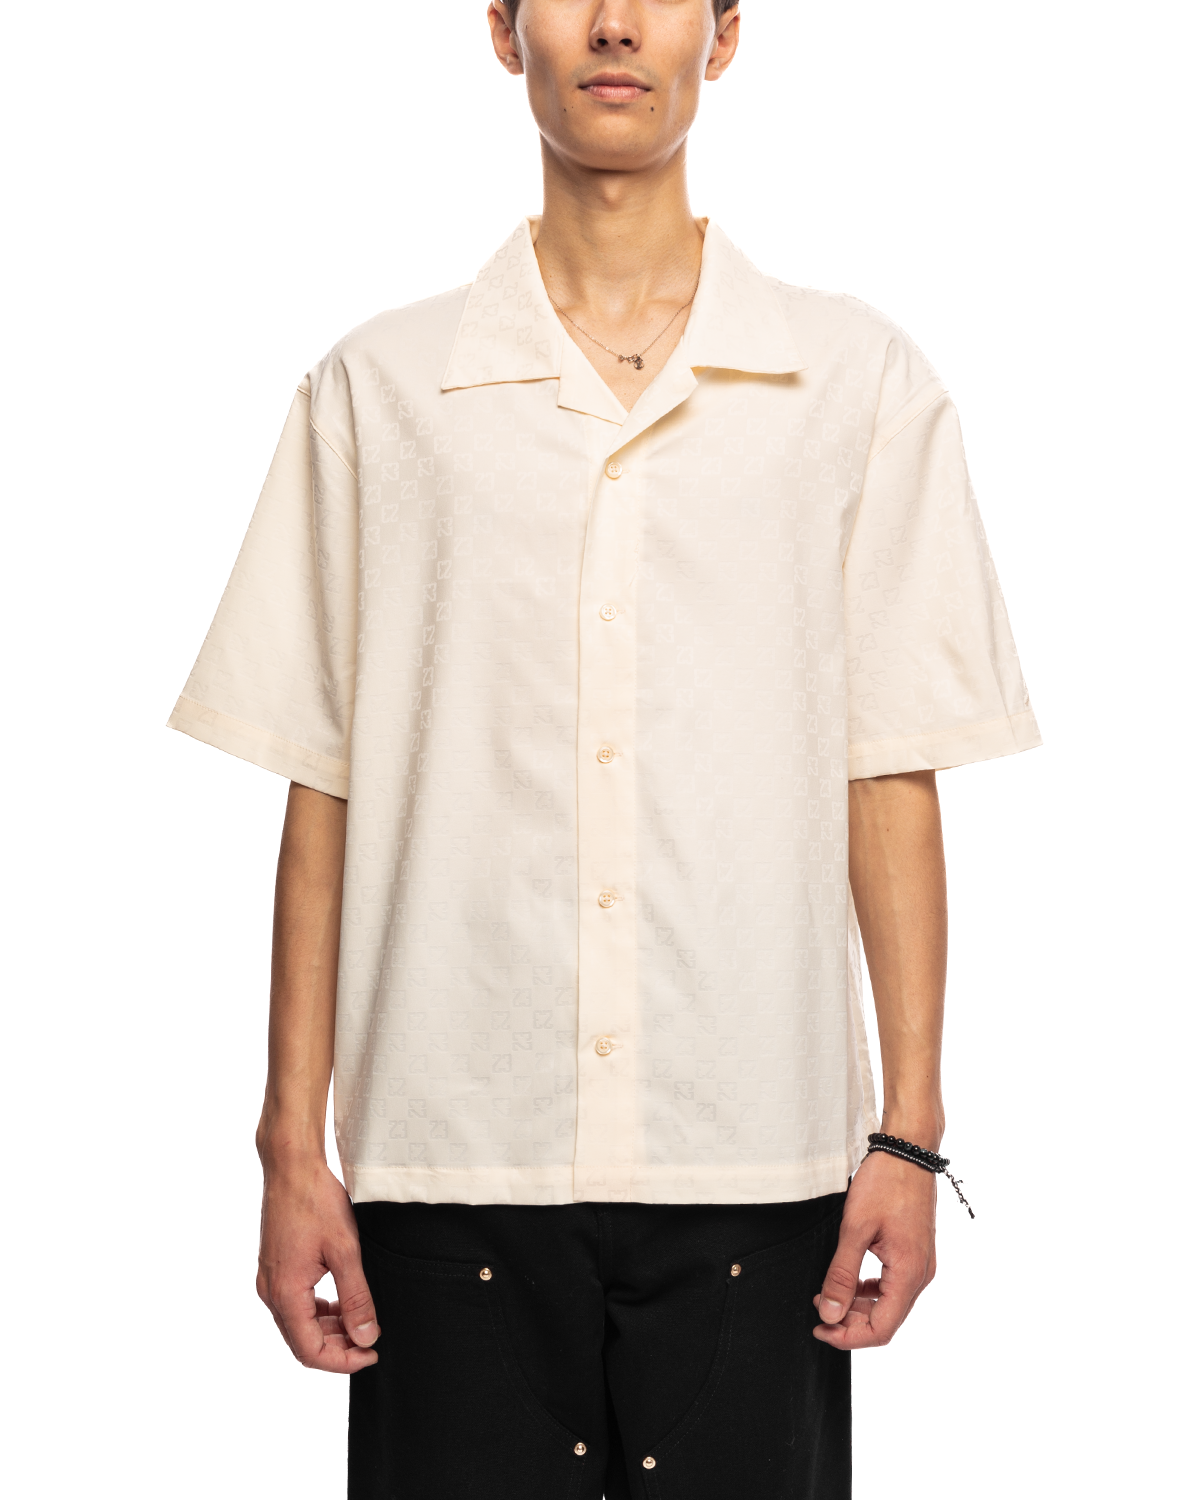 Jordan Essentials Short Sleeve Shirt Pale Ivory